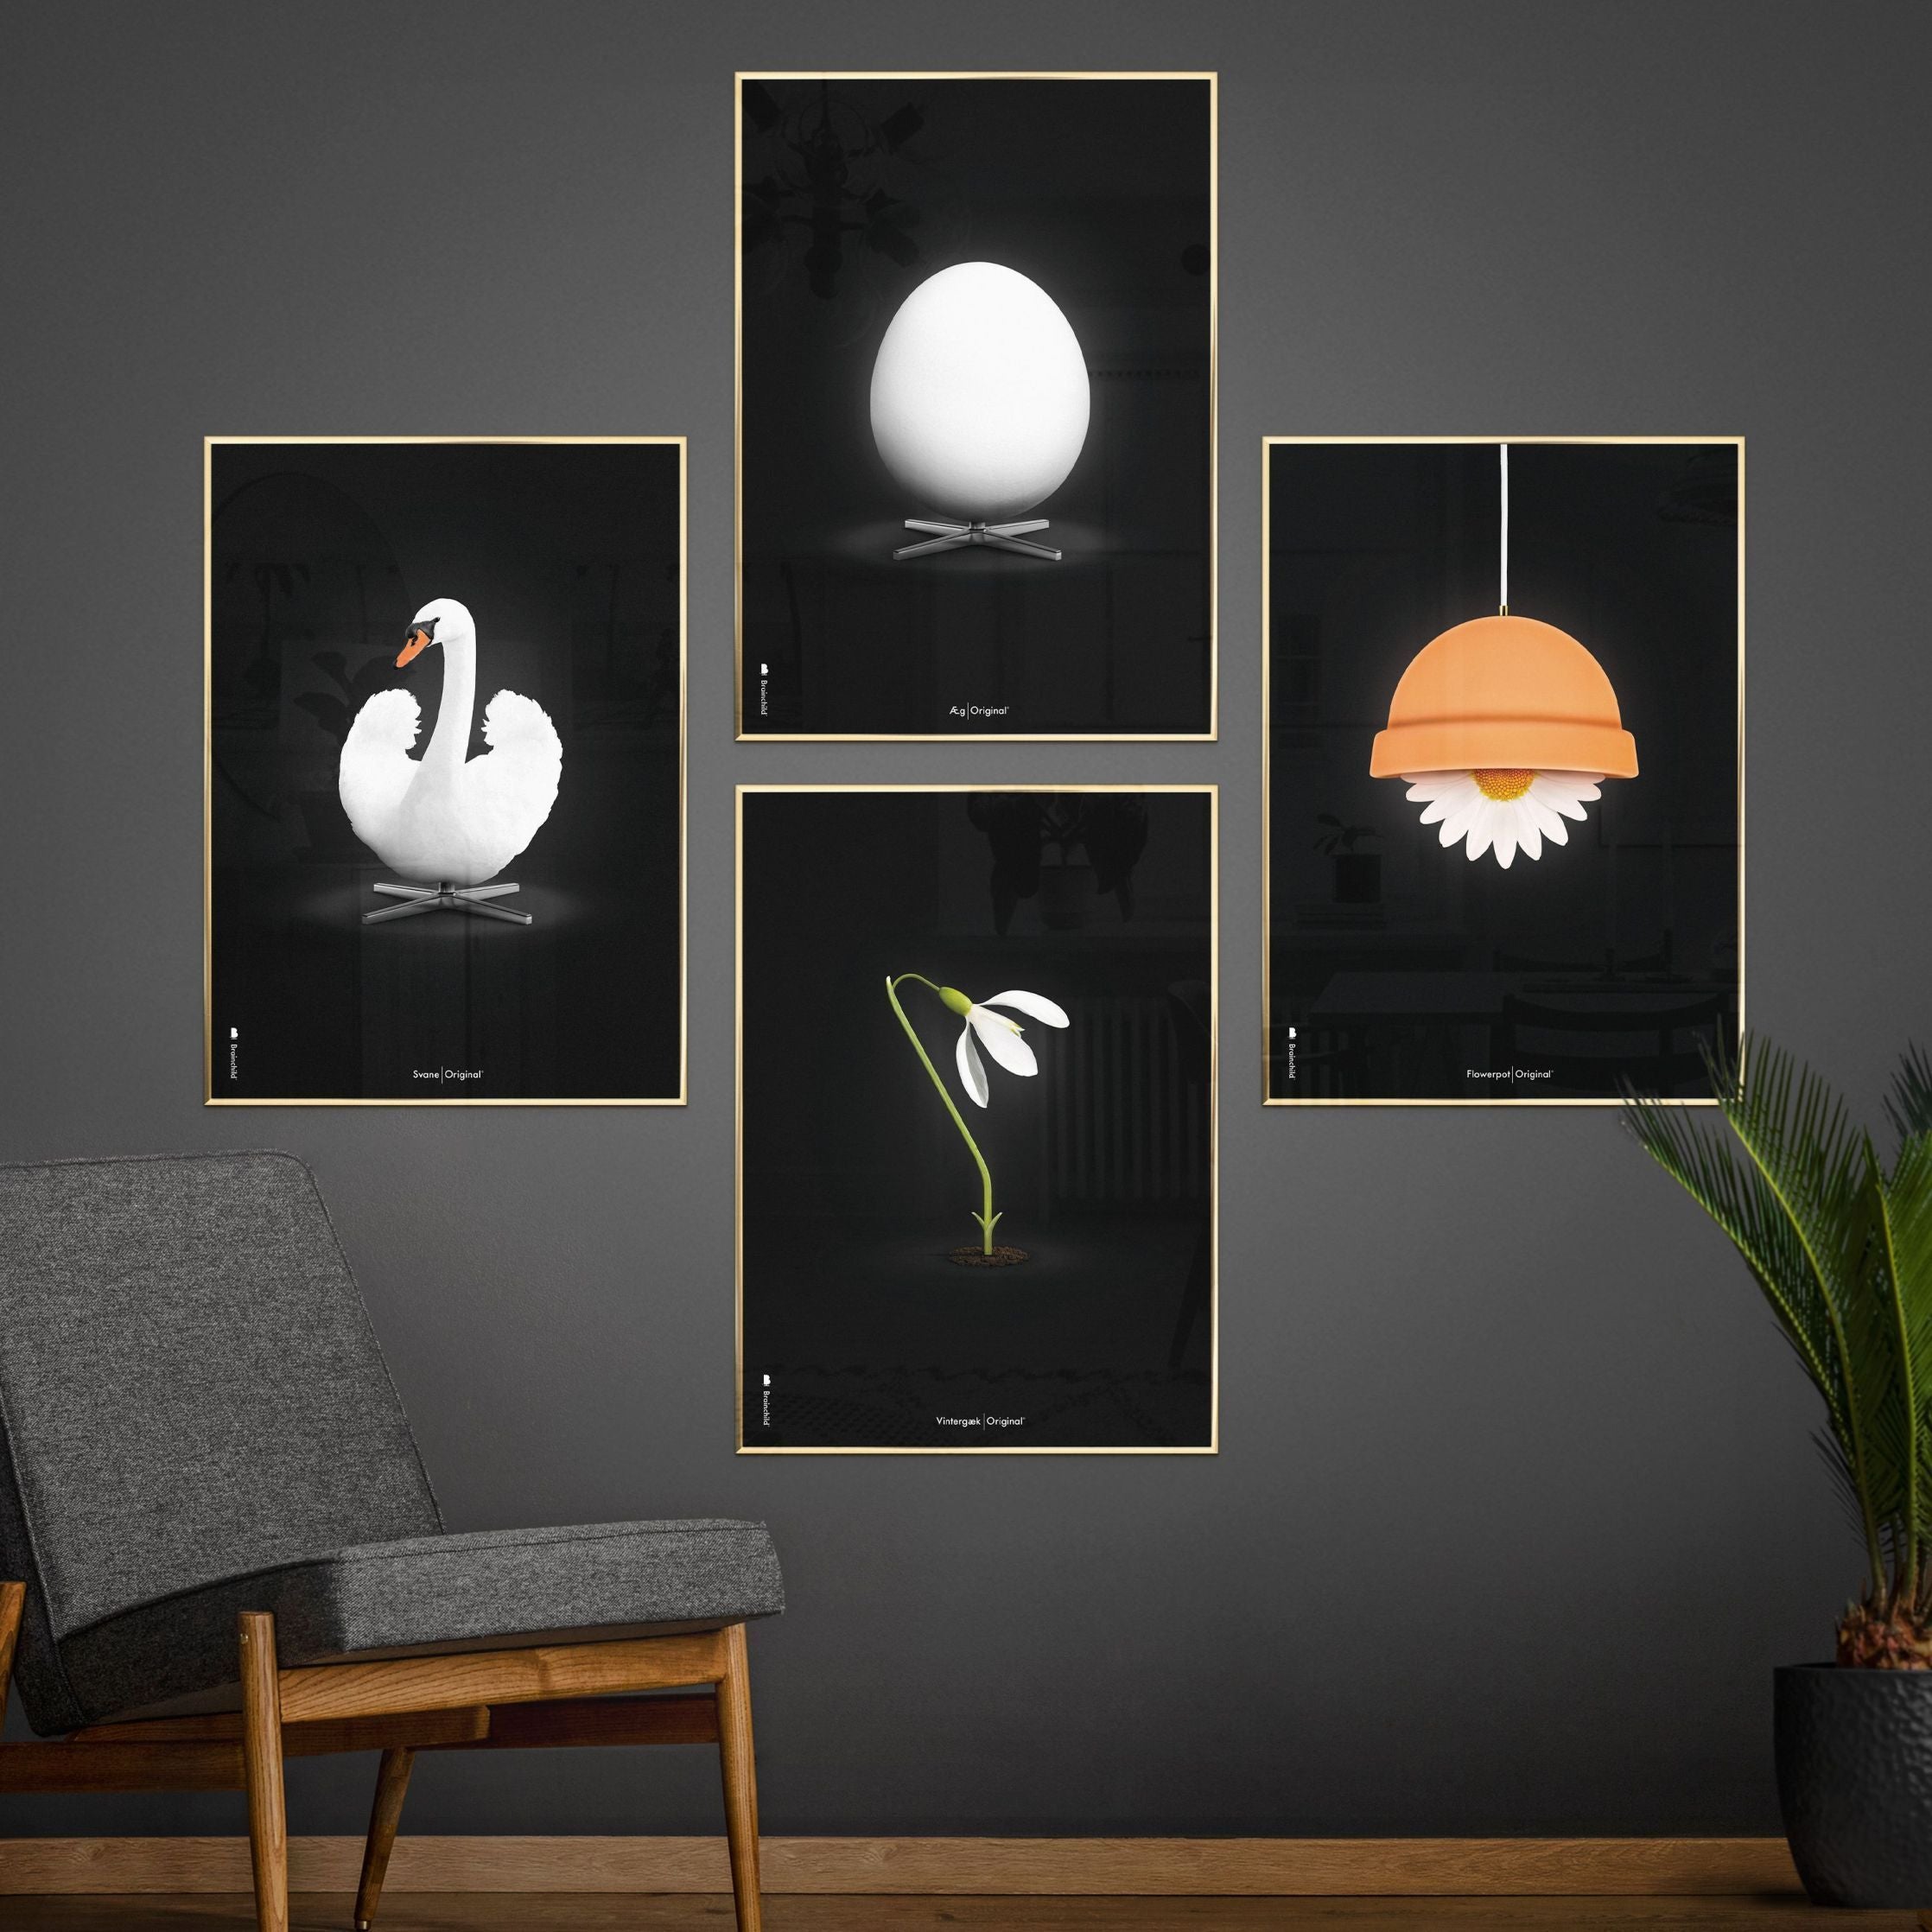 Brainchild Swan Classic Poster, Frame Made Of Dark Wood 30x40 Cm, White/White Background